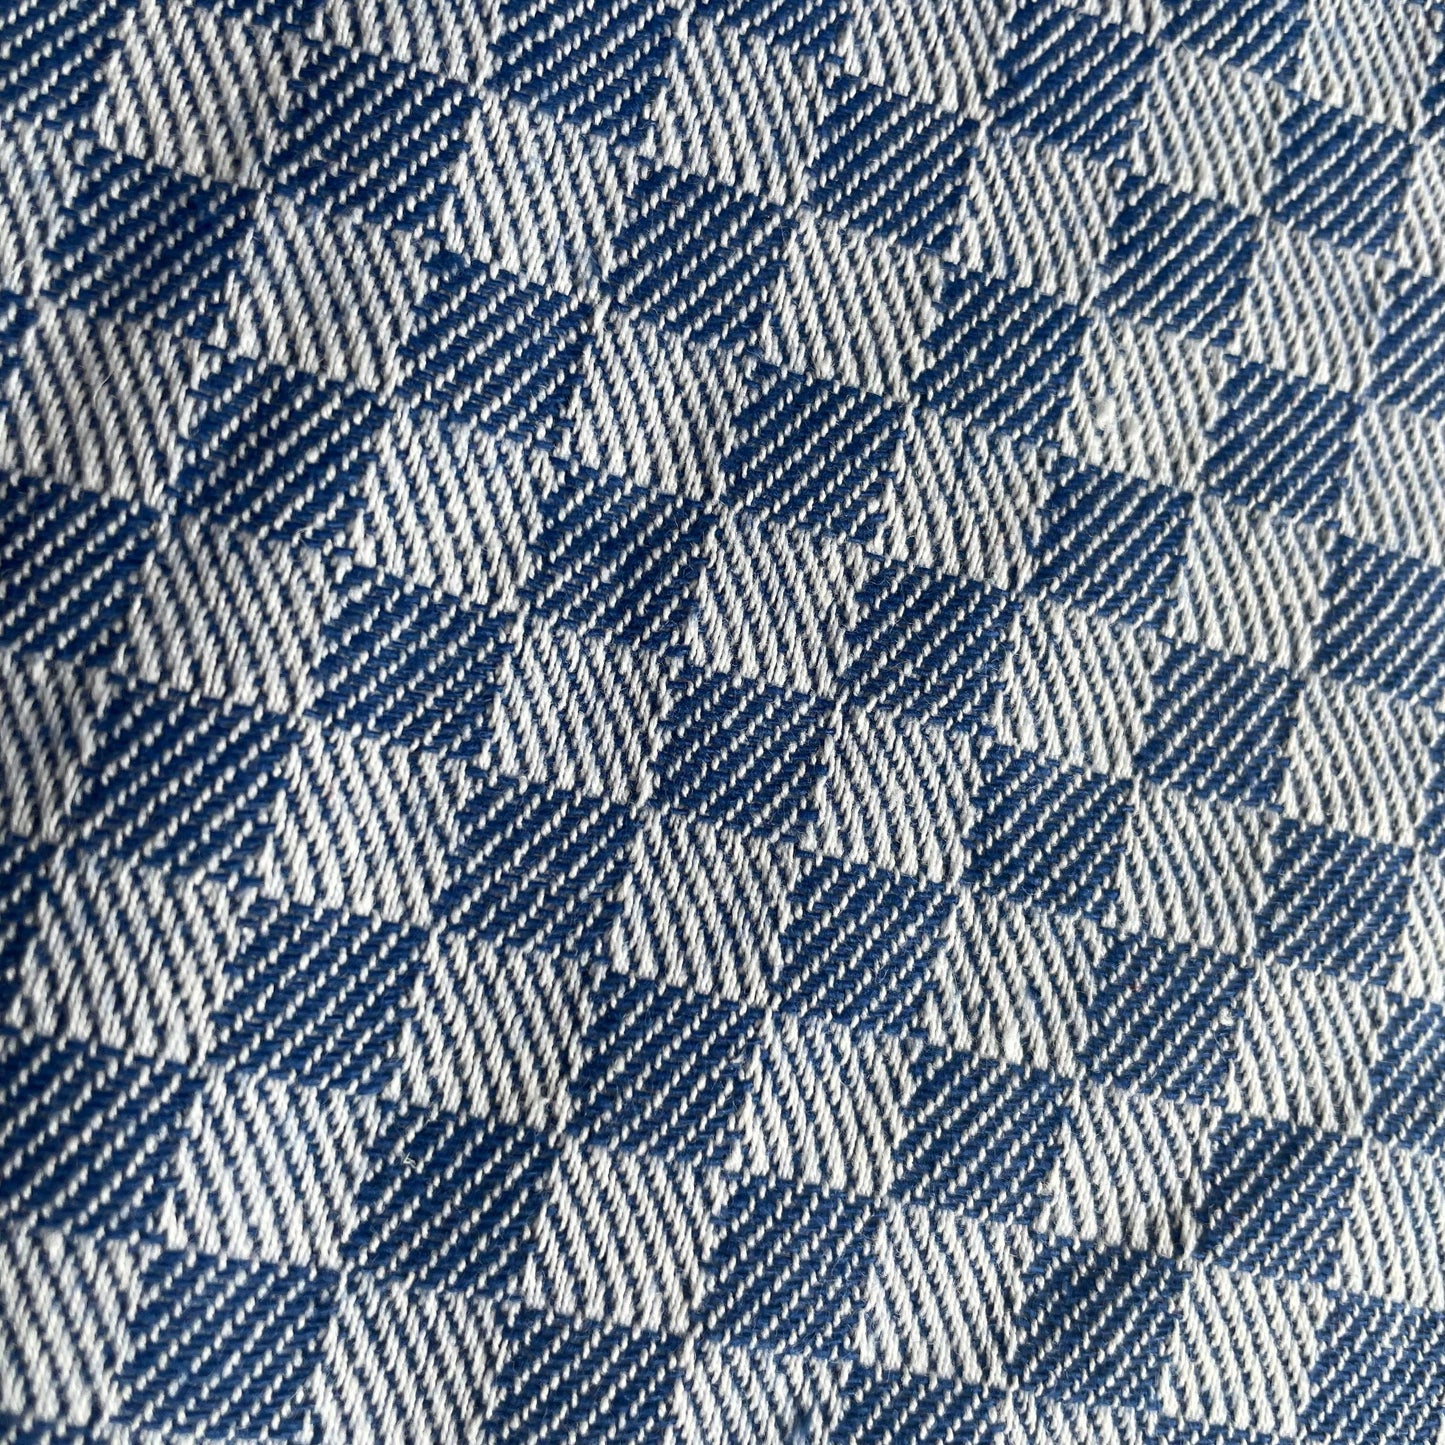 20 inch sq woven blue check 100% cotton napkins set of 4